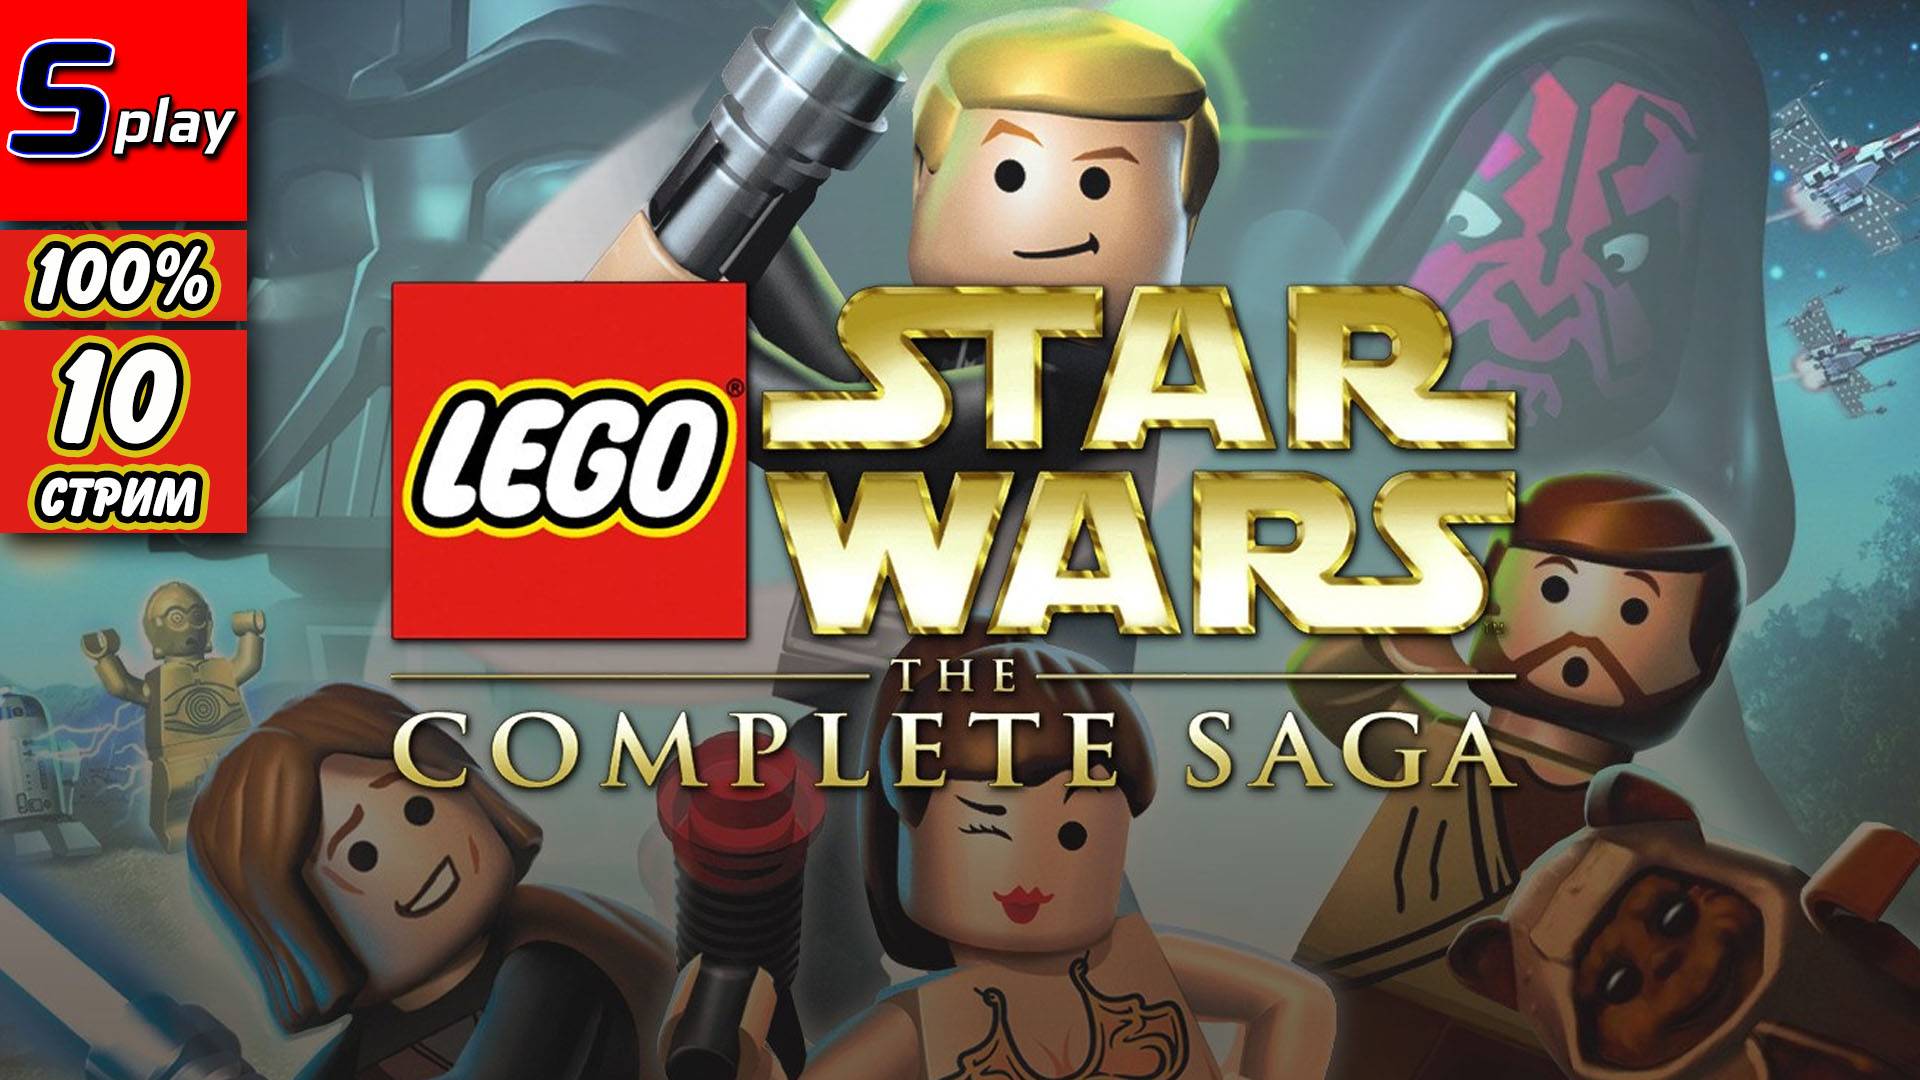 Lego Star Wars The Complete Saga на 100% - [10-стрим] - Собирательство